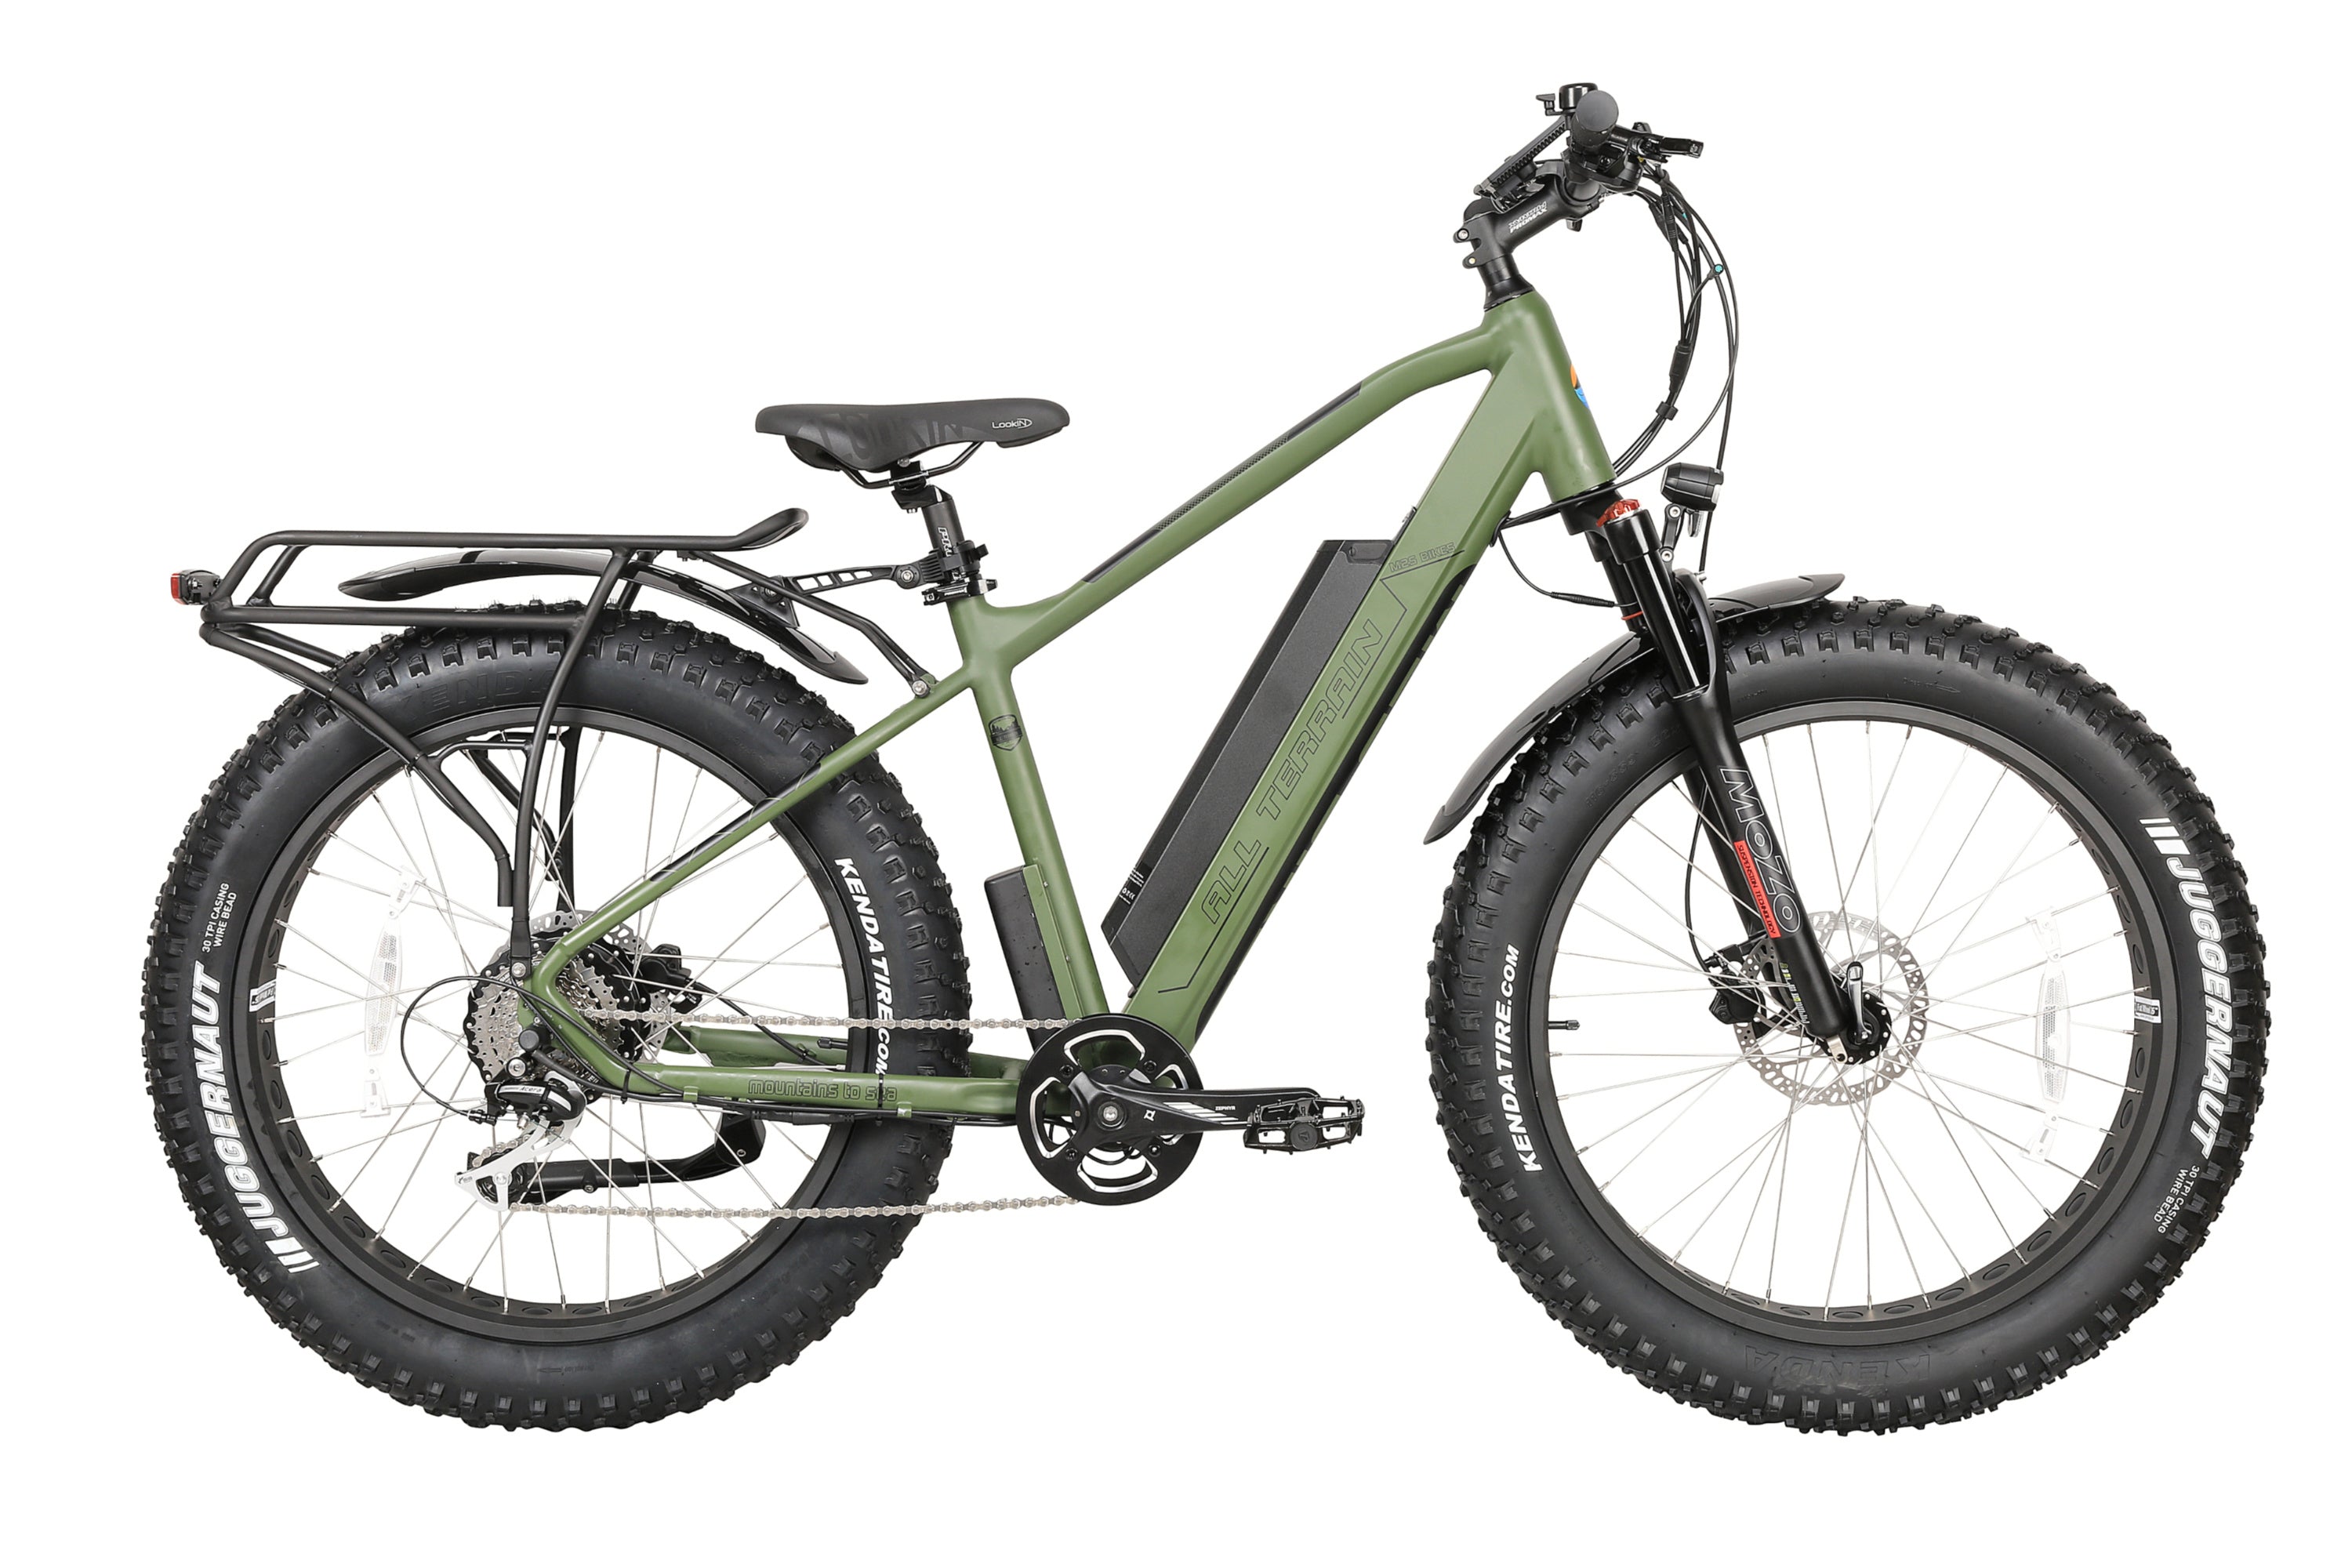 Sea All Premium High Performance M2S to R750 Tire – Sports Fat Bike Terrain Electric Mountains -